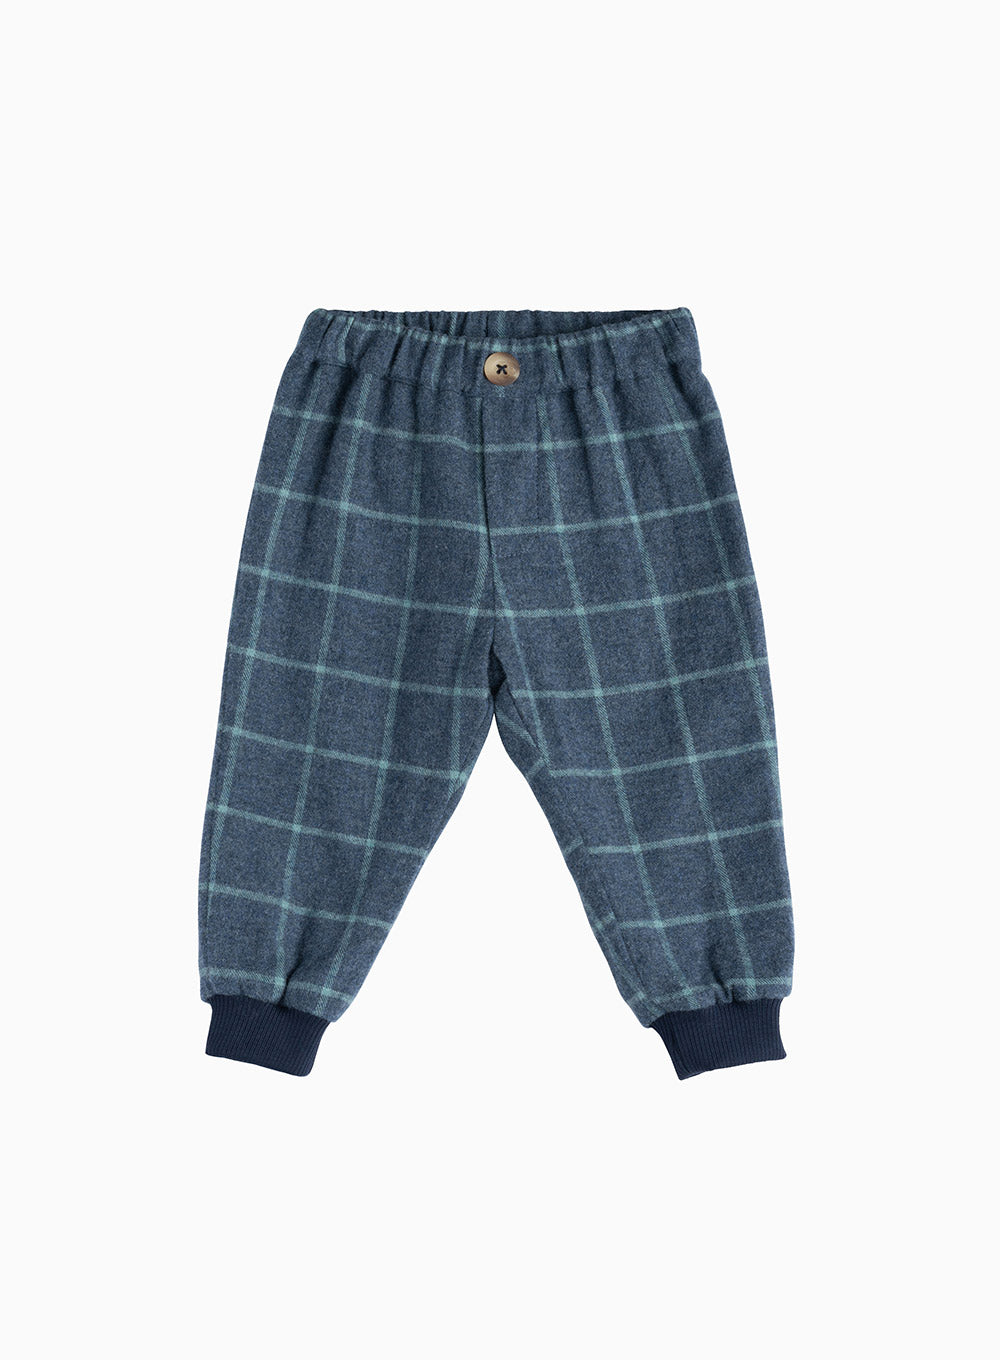 Amazon.com: Young Big Boys Pajamas Pants,Long Plaid Check Cotton Pajama  Lounge Pants 8-17 Years: Clothing, Shoes & Jewelry